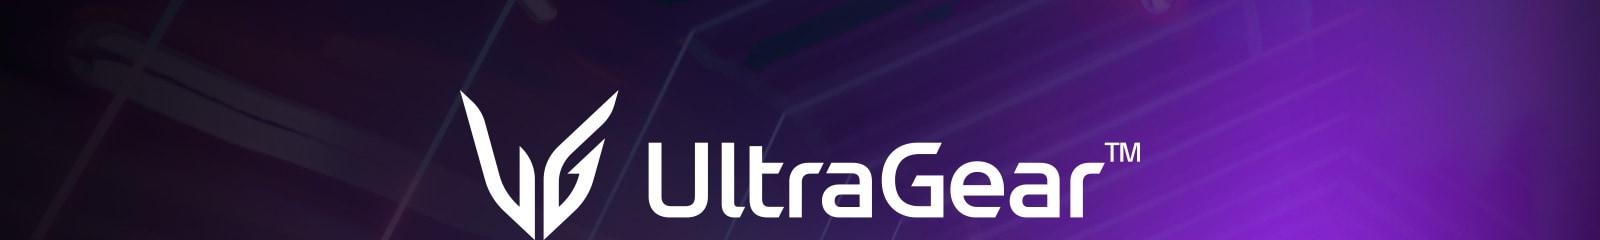 mnt-ultragear-24gq50f-01-1-lg-ultragear-desktop